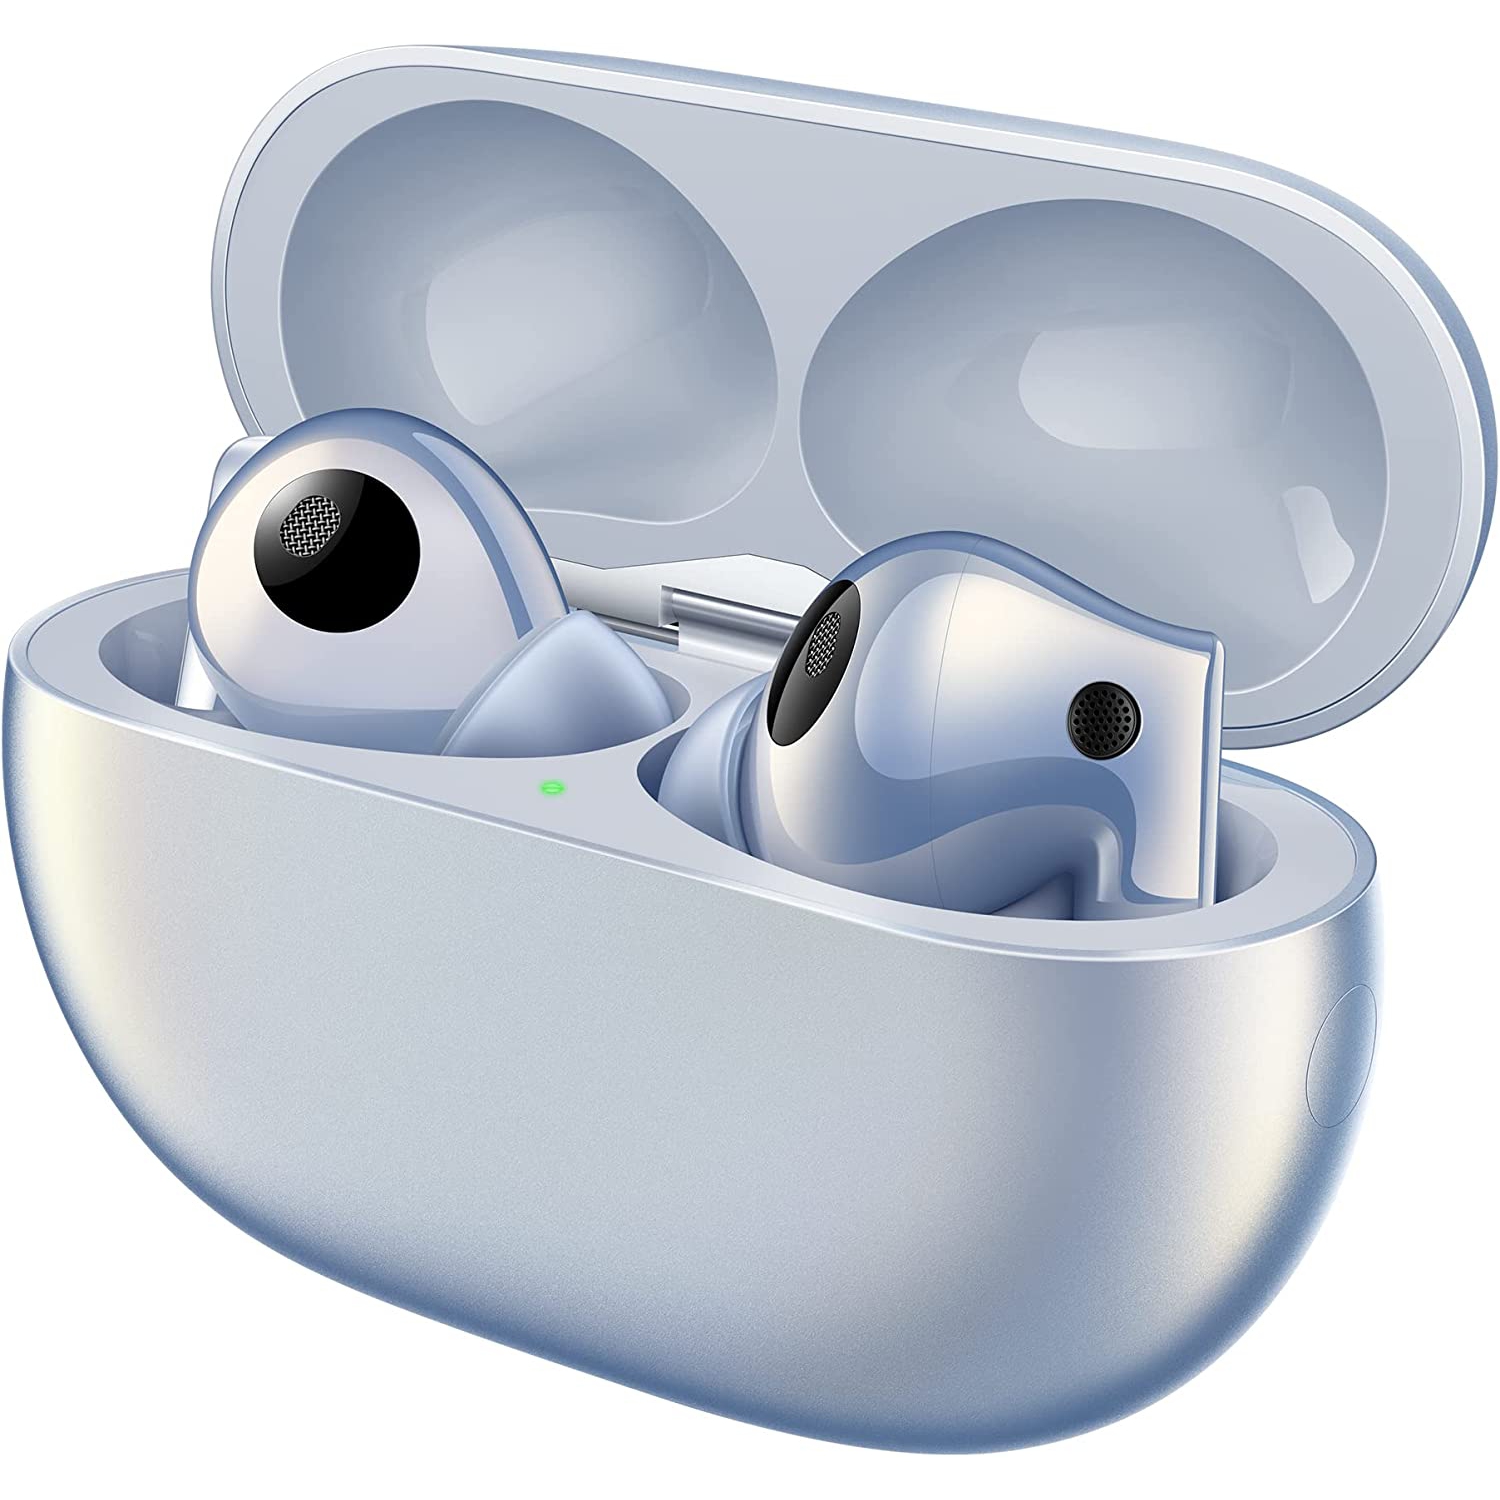 HUAWEI FreeBuds Pro 2 Wireless Earbuds - In-Ears Headphones with 